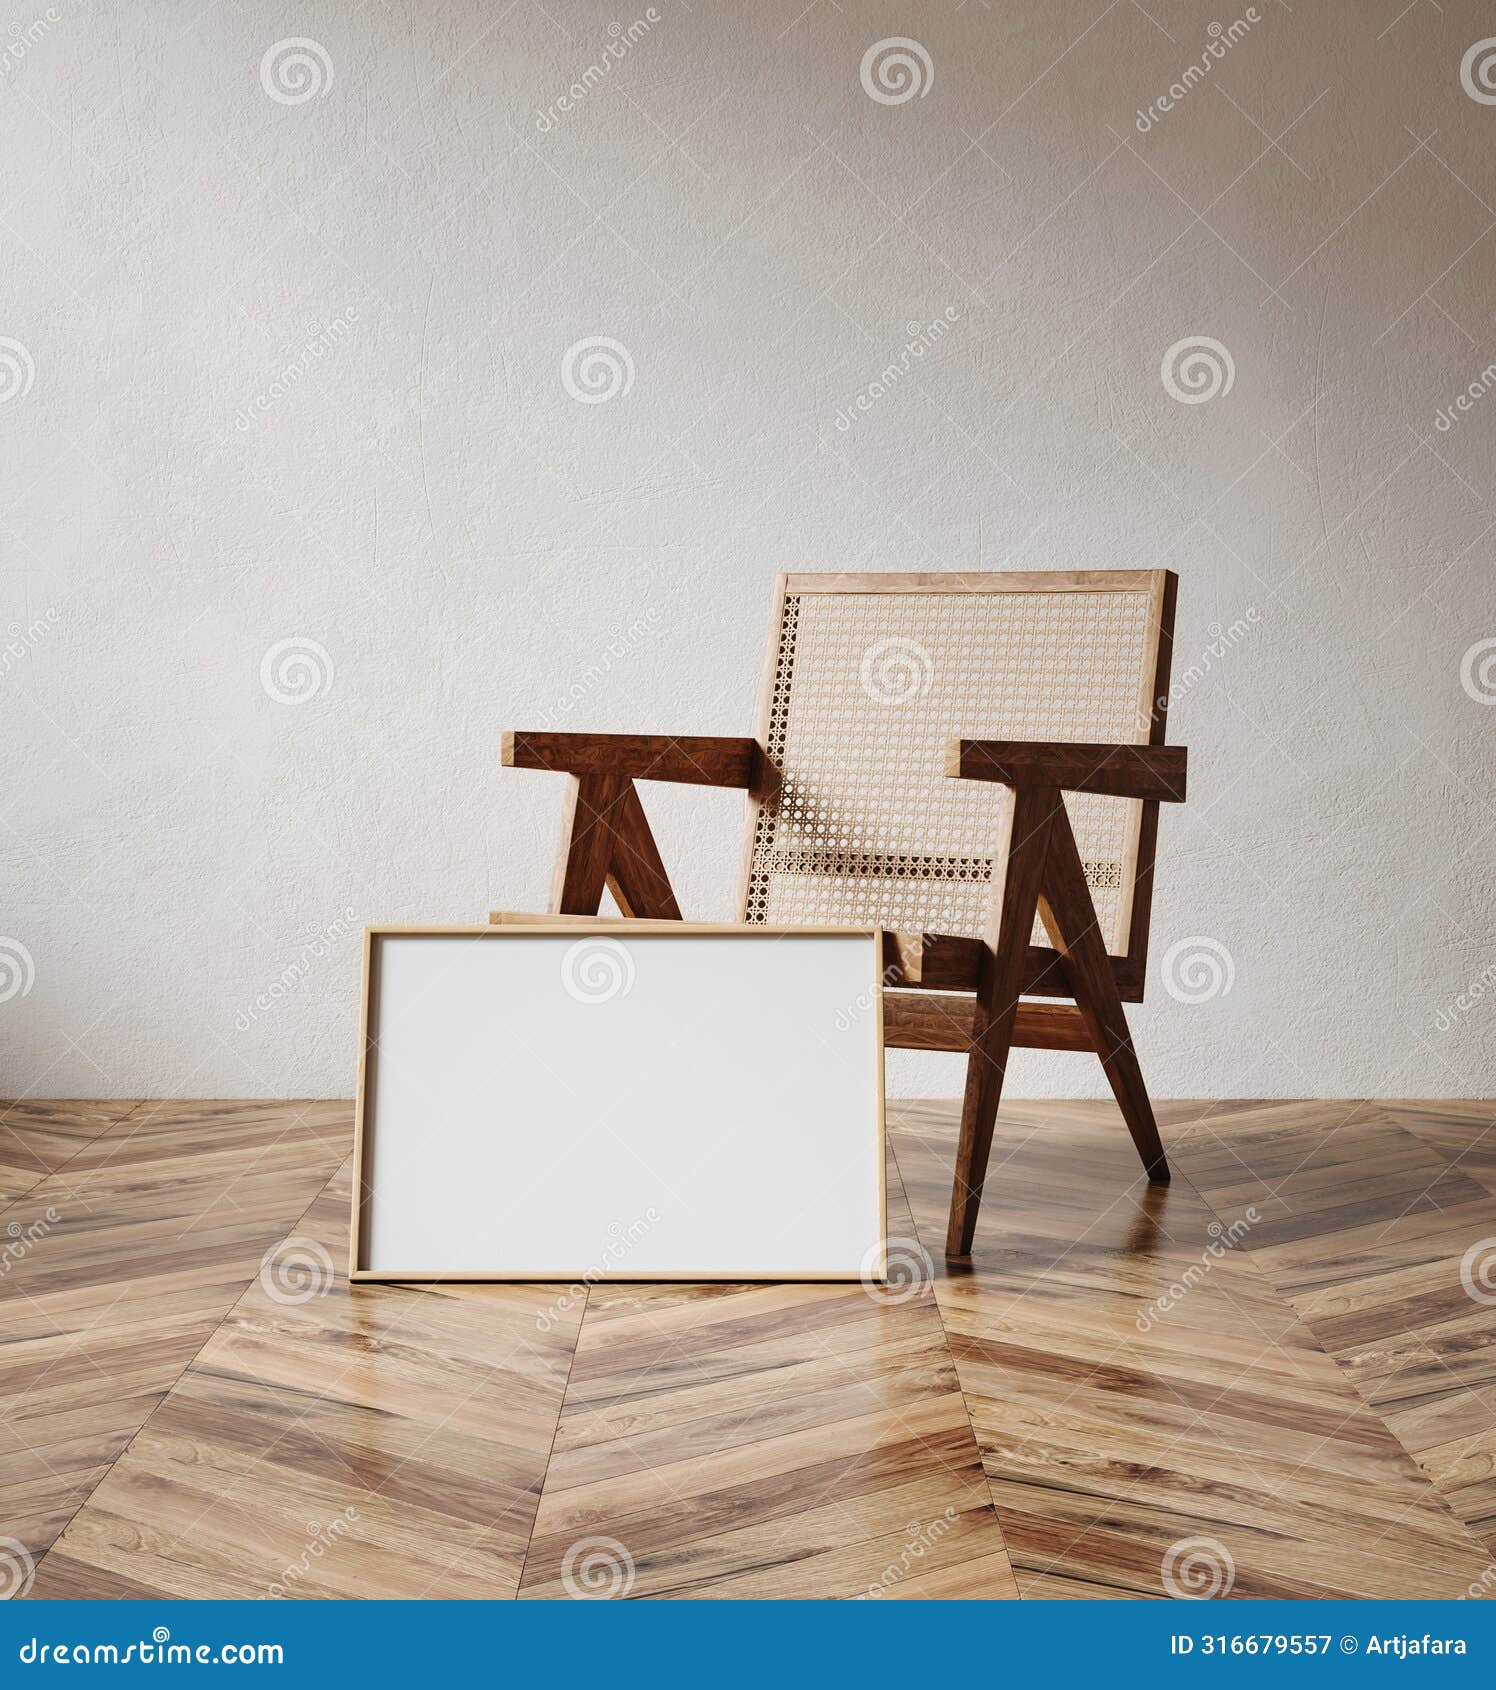 mockup frame in minimalist nomadic interior background